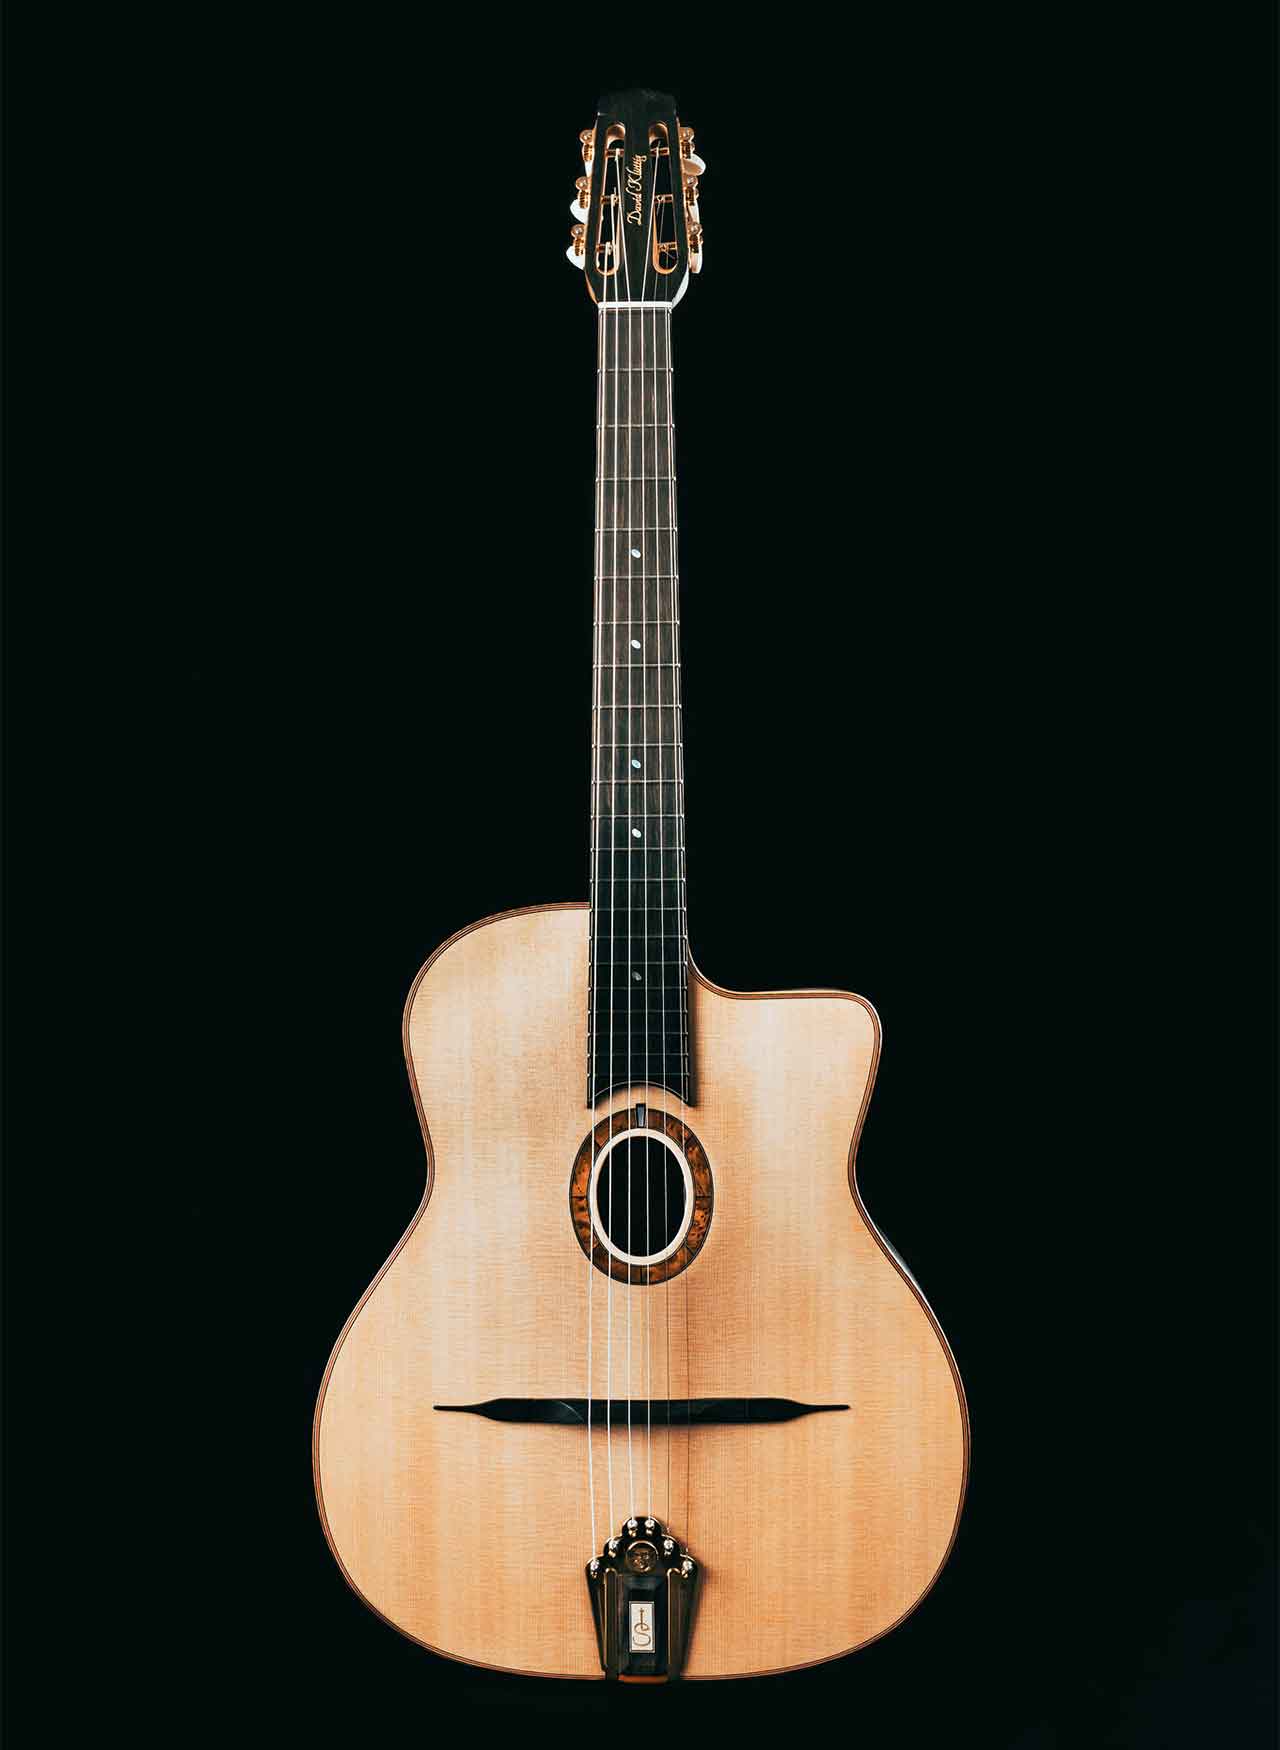 Stankevicius Guitars-Model David Kluttig